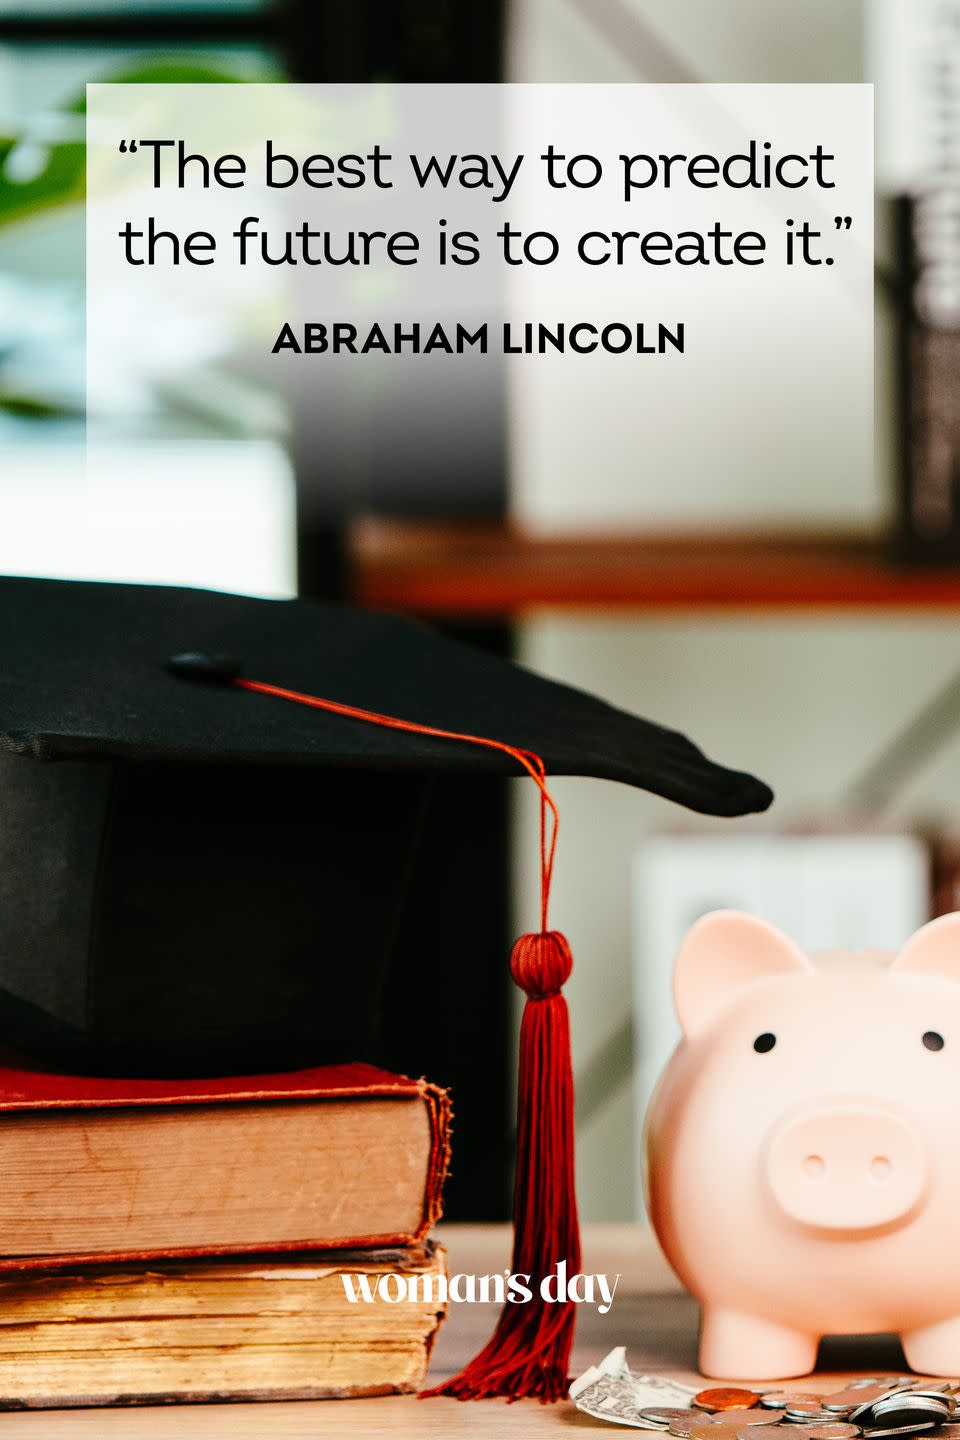 76) Abraham Lincoln